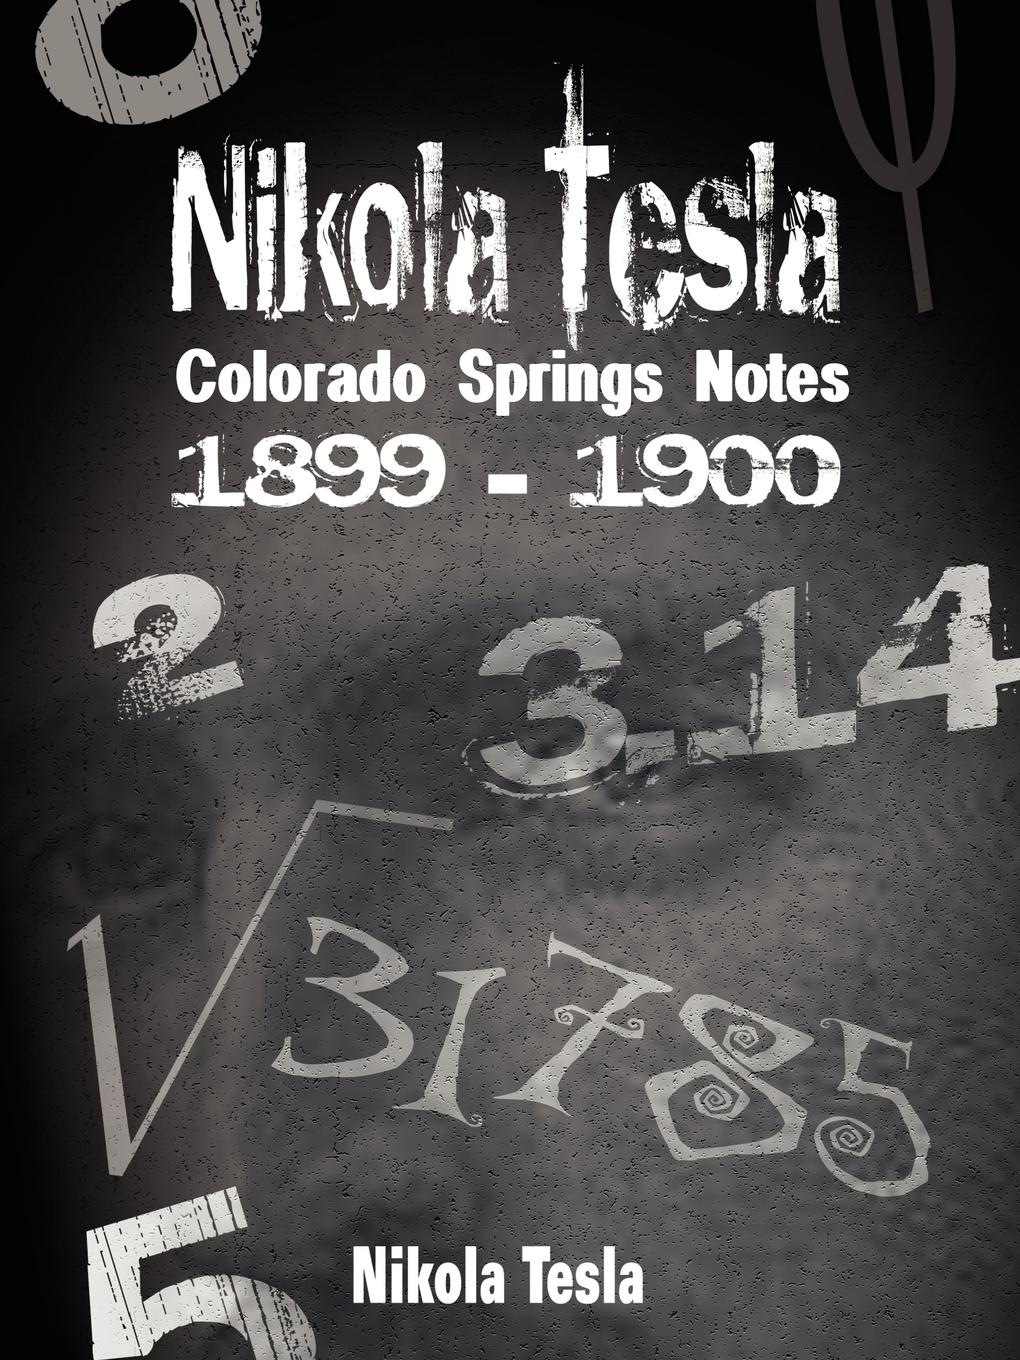 Nikola Tesla - Tesla, Nikola